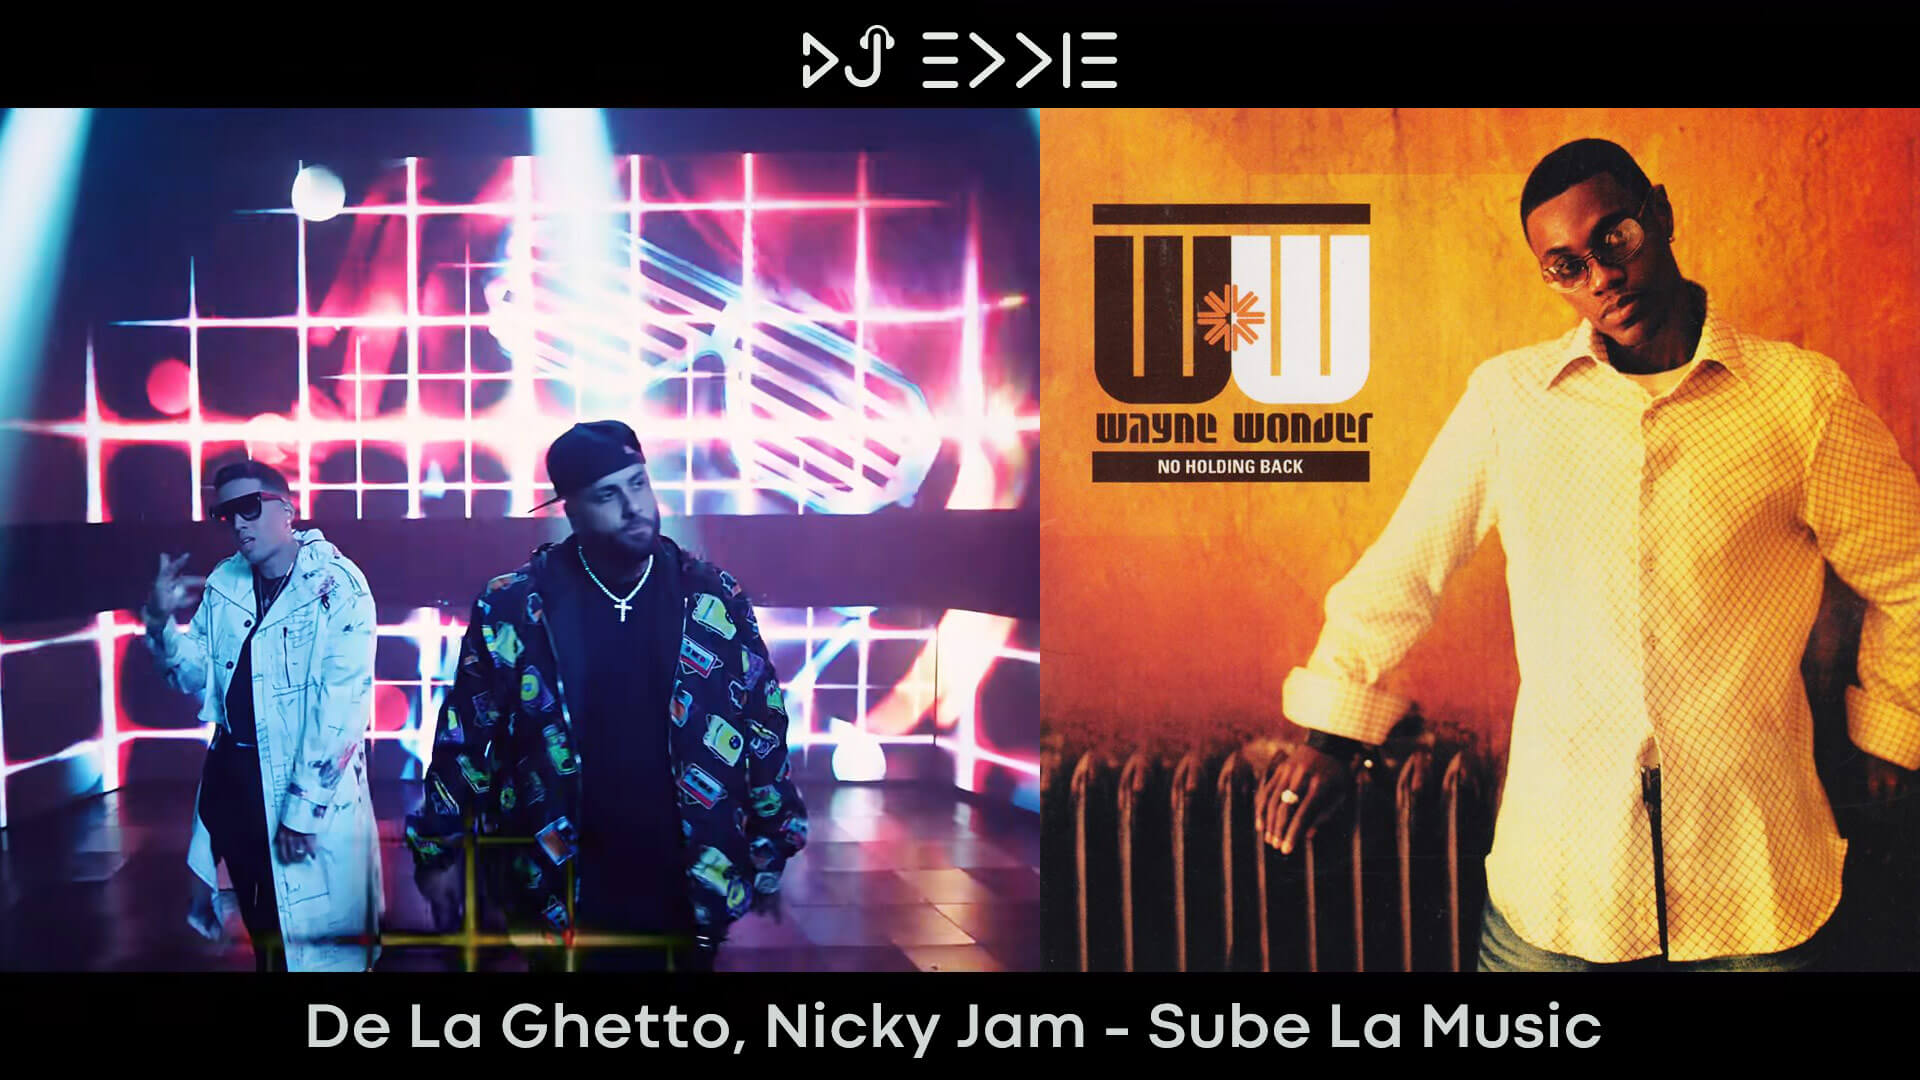 De La Ghetto, Nicky Jam – Sube La Music (remake of Wayne Wonder – No Letting Go)